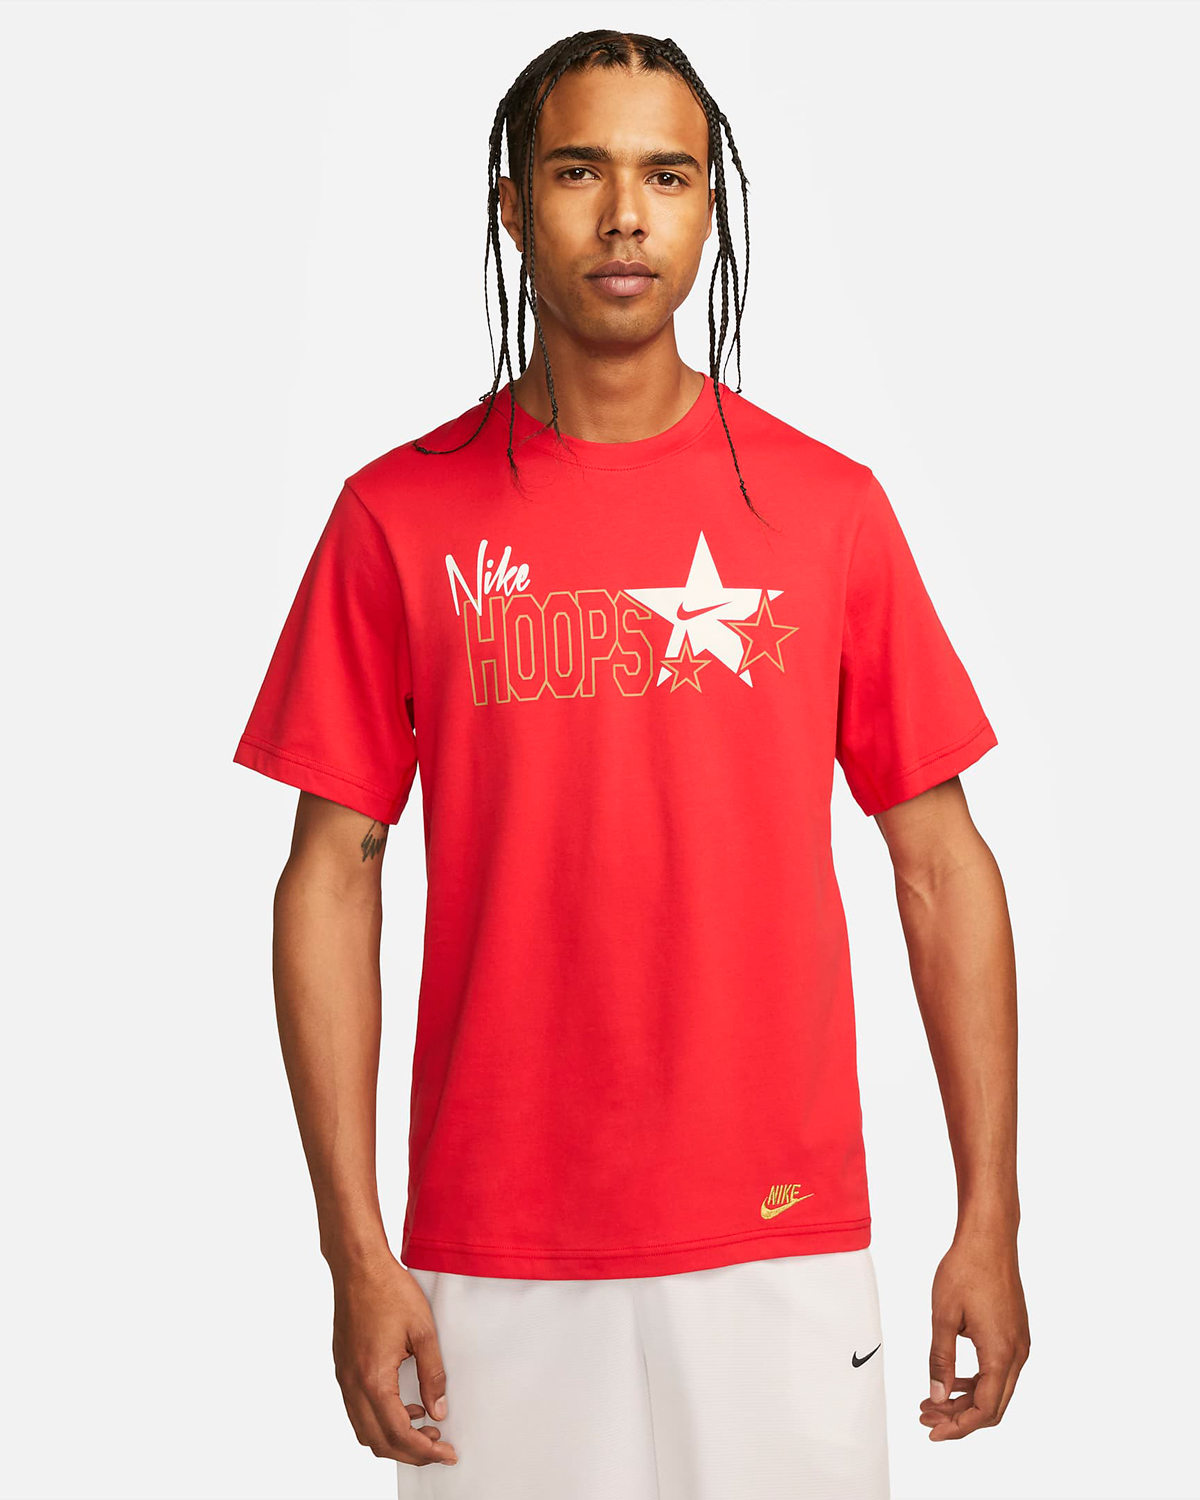 Nike-Hoops-Basketball-Shirt-University-Red